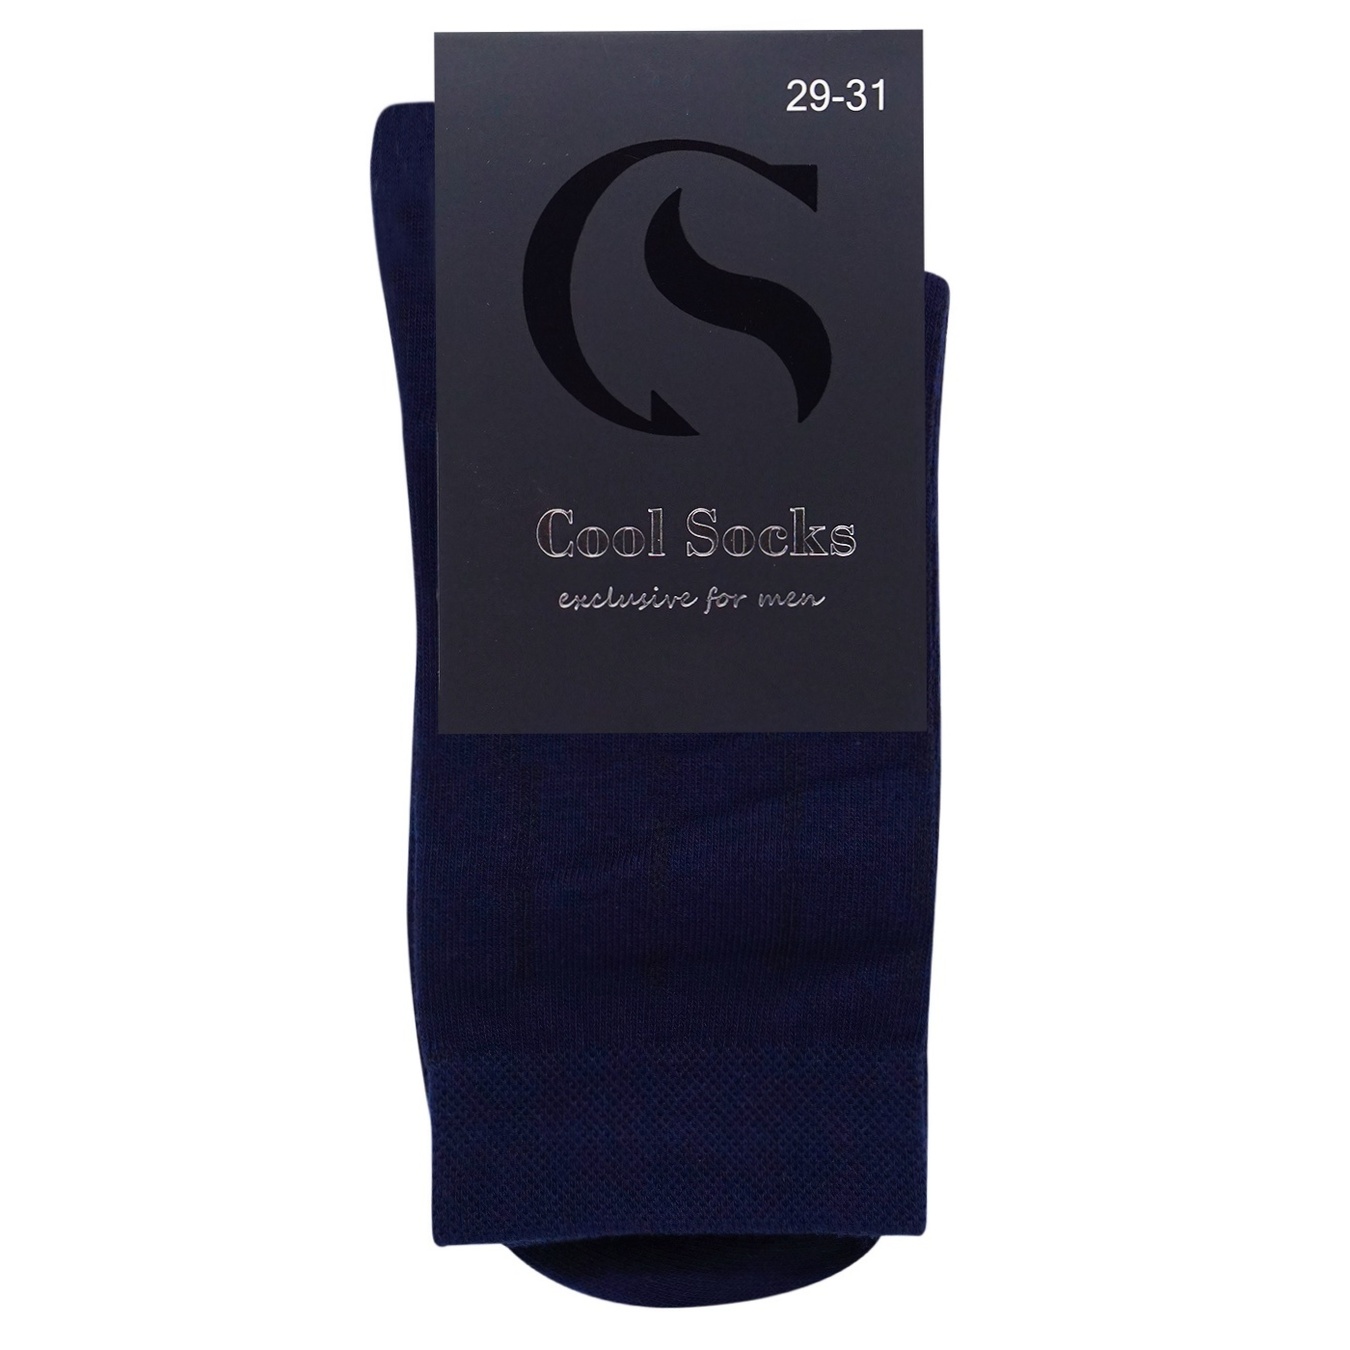 Cool Socks men's socks with a stripe pattern, dark blue, 29-31 years old.